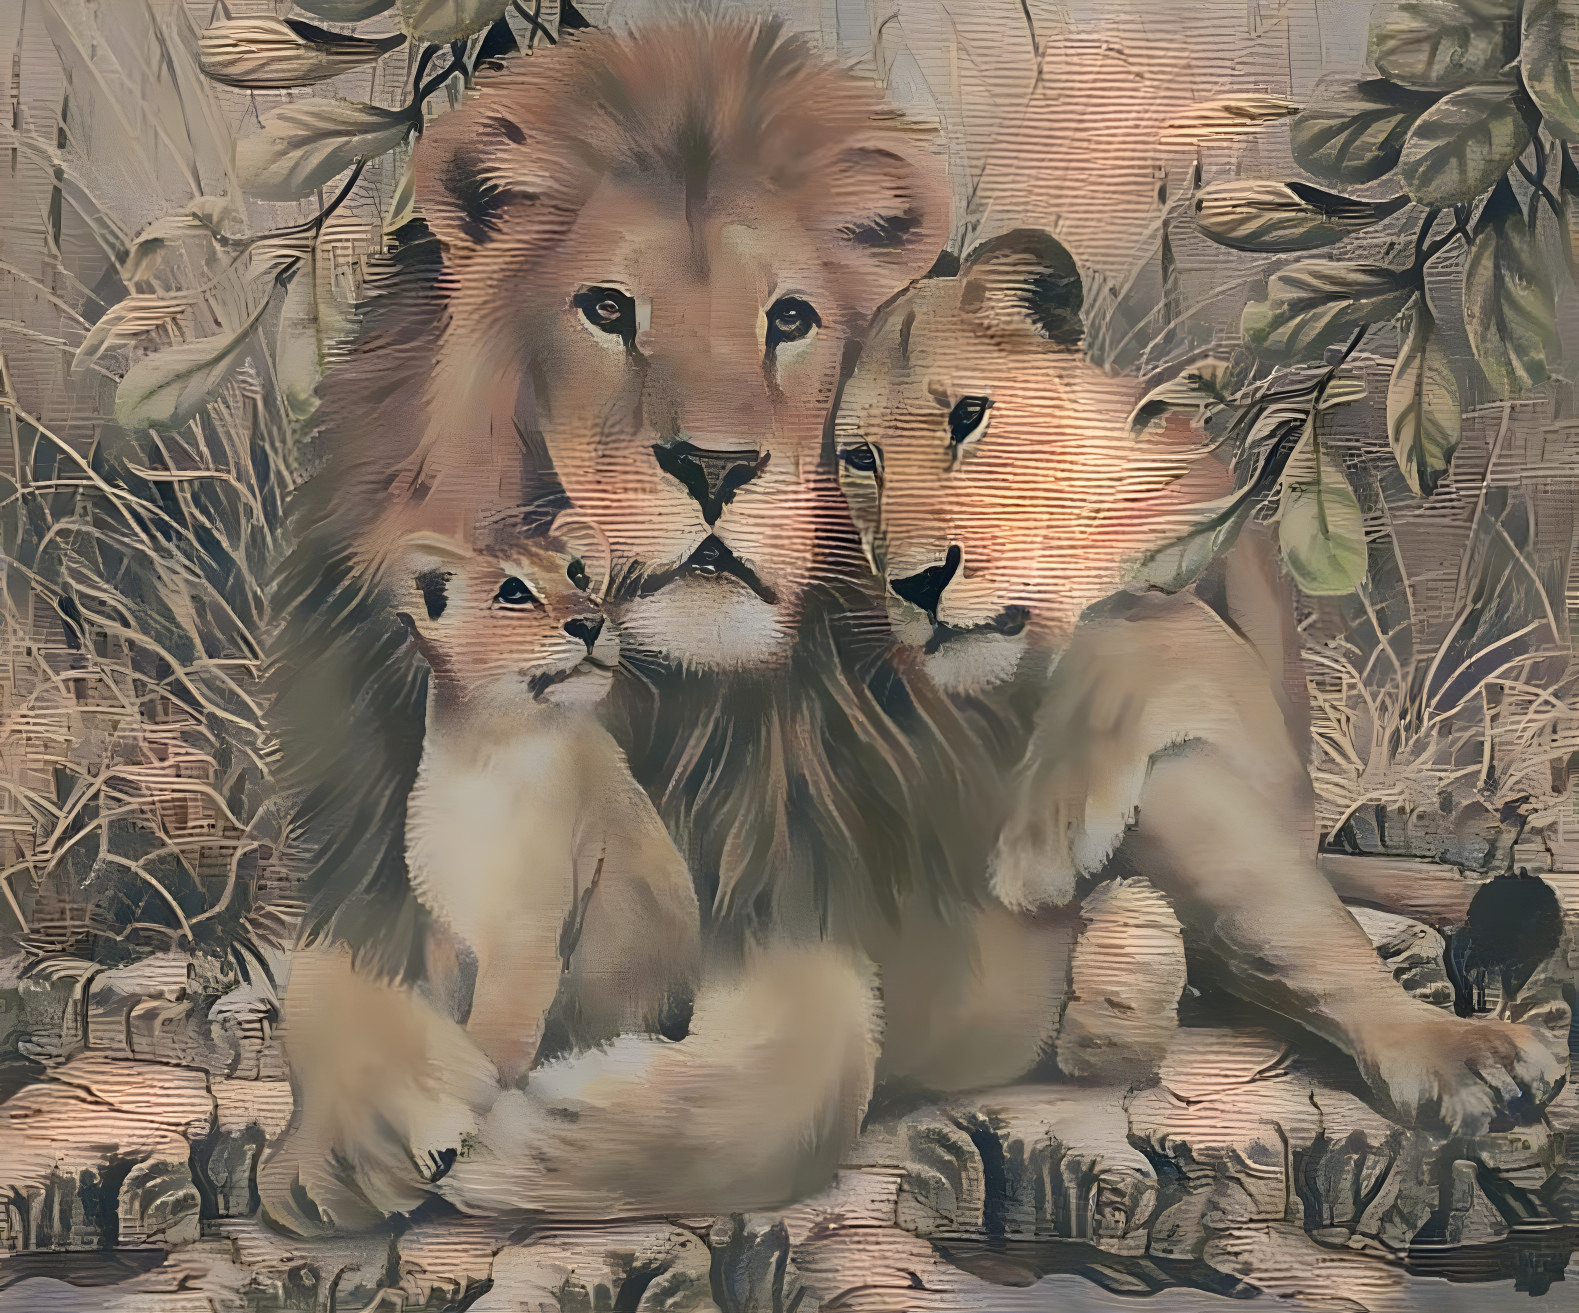 A Lion With It's Cubs